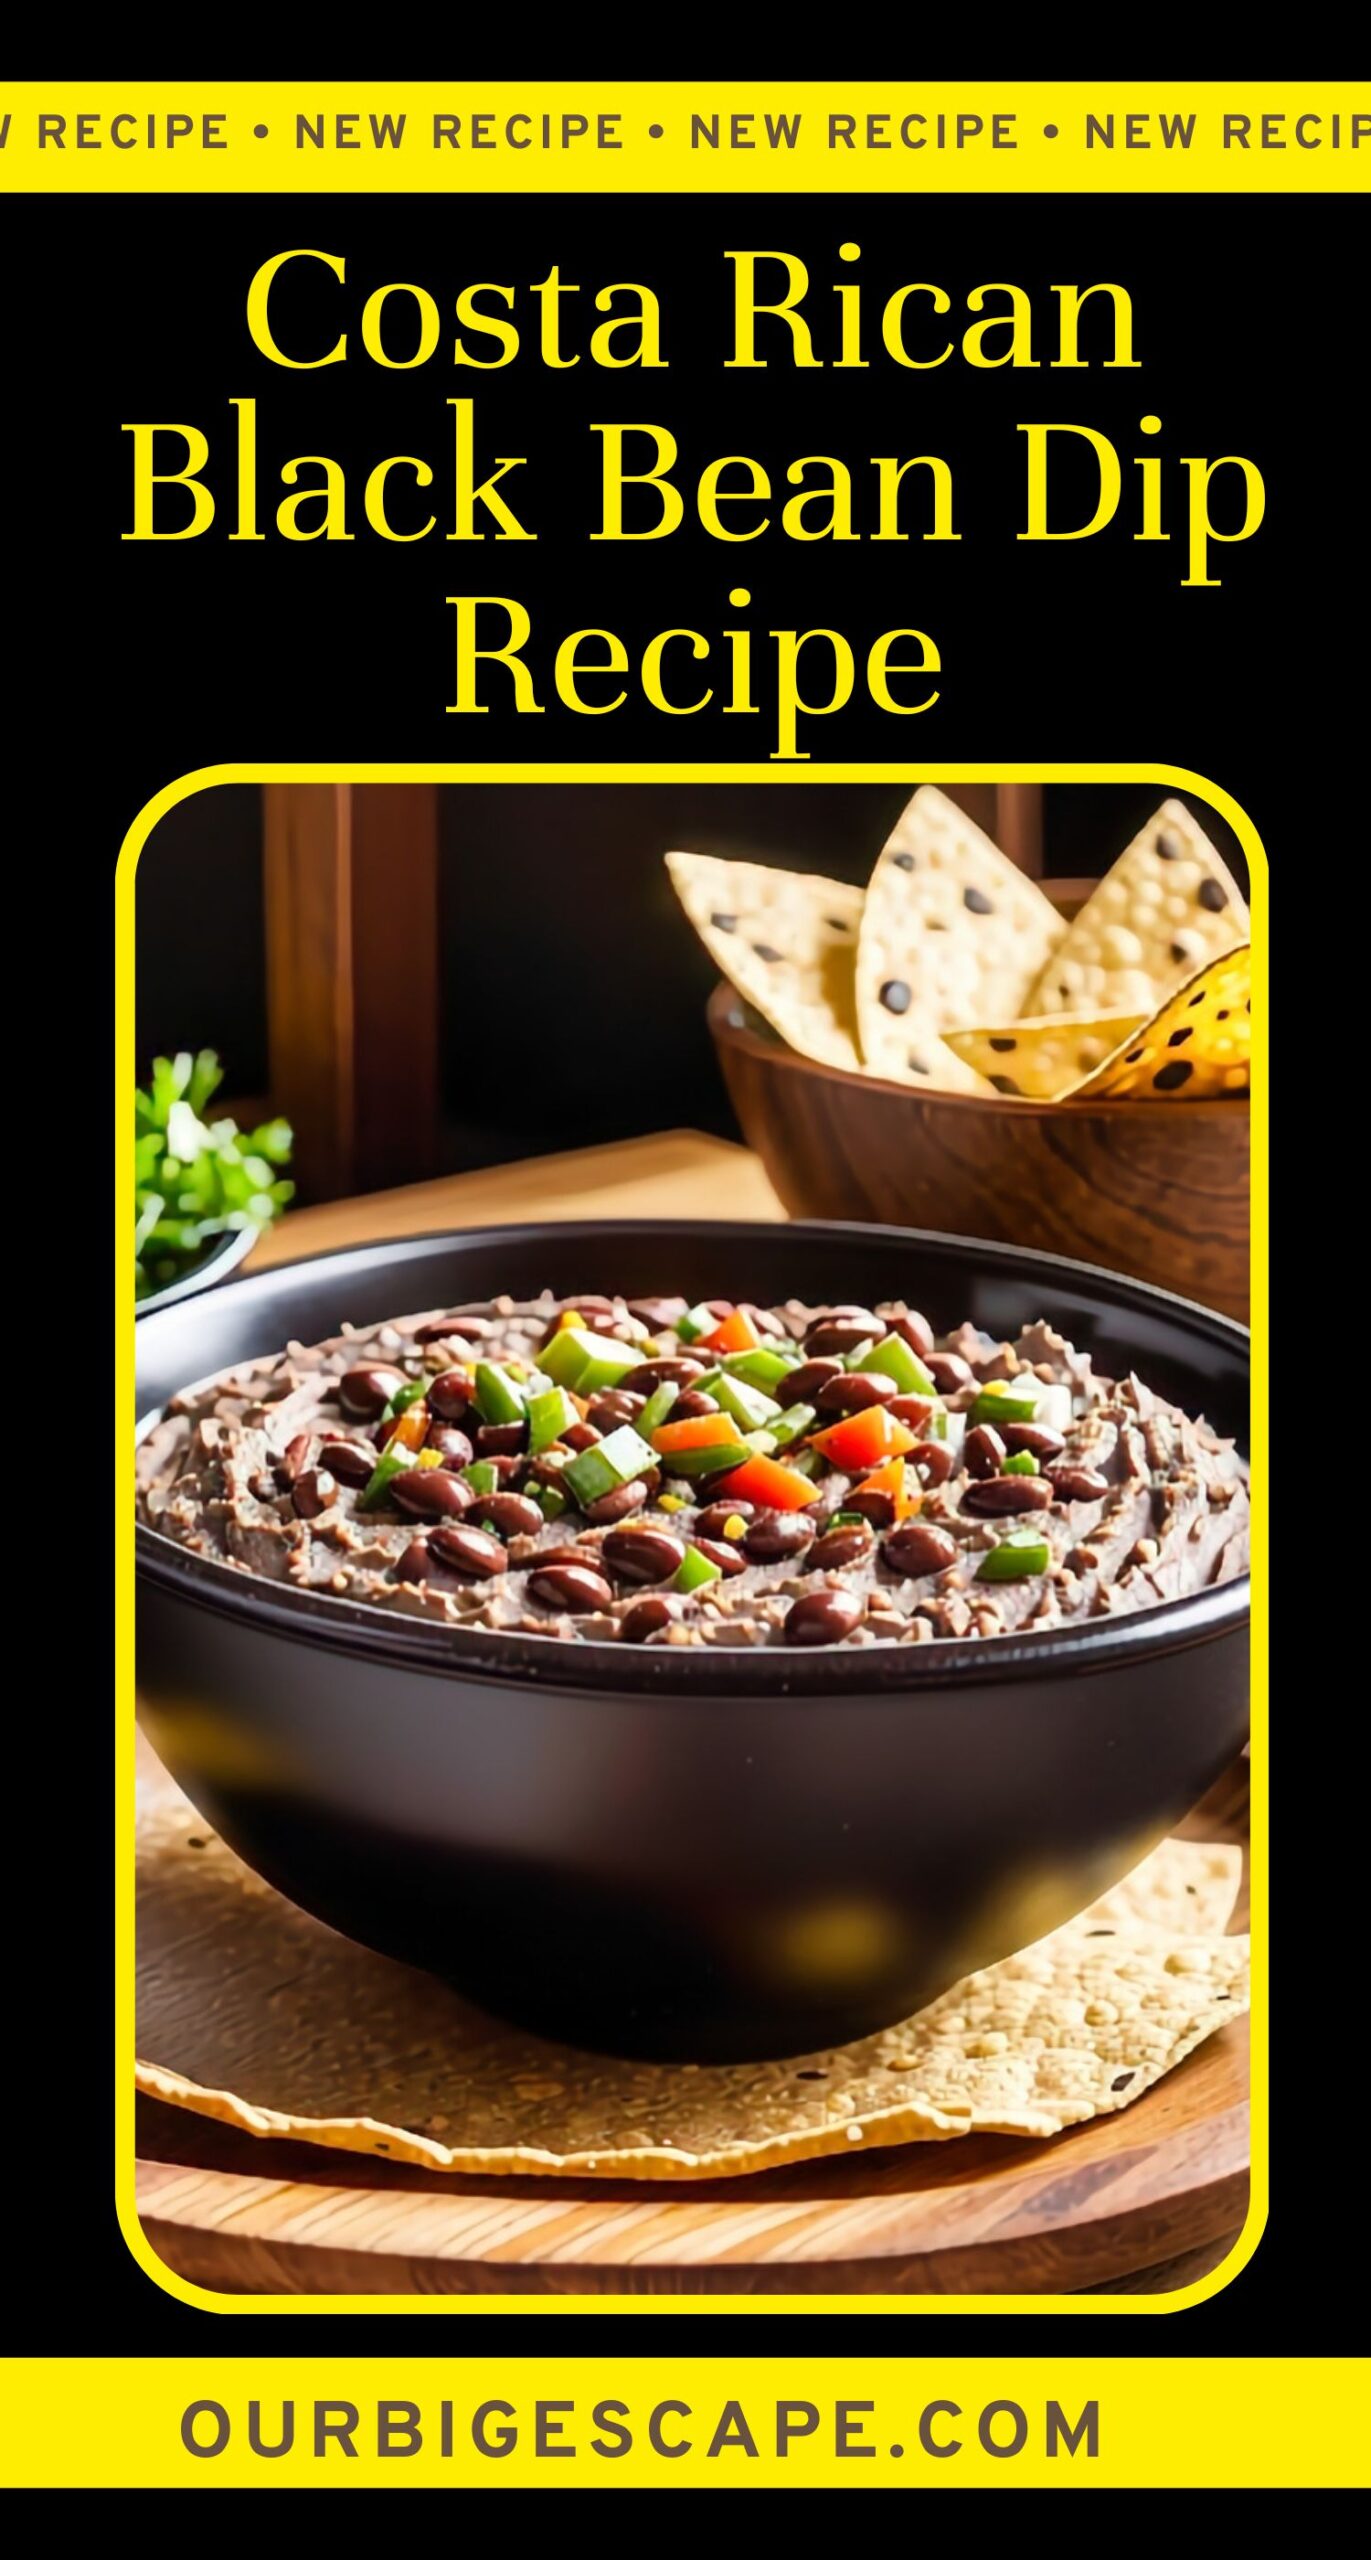 12. Costa Rican Black Bean Dip Recipe